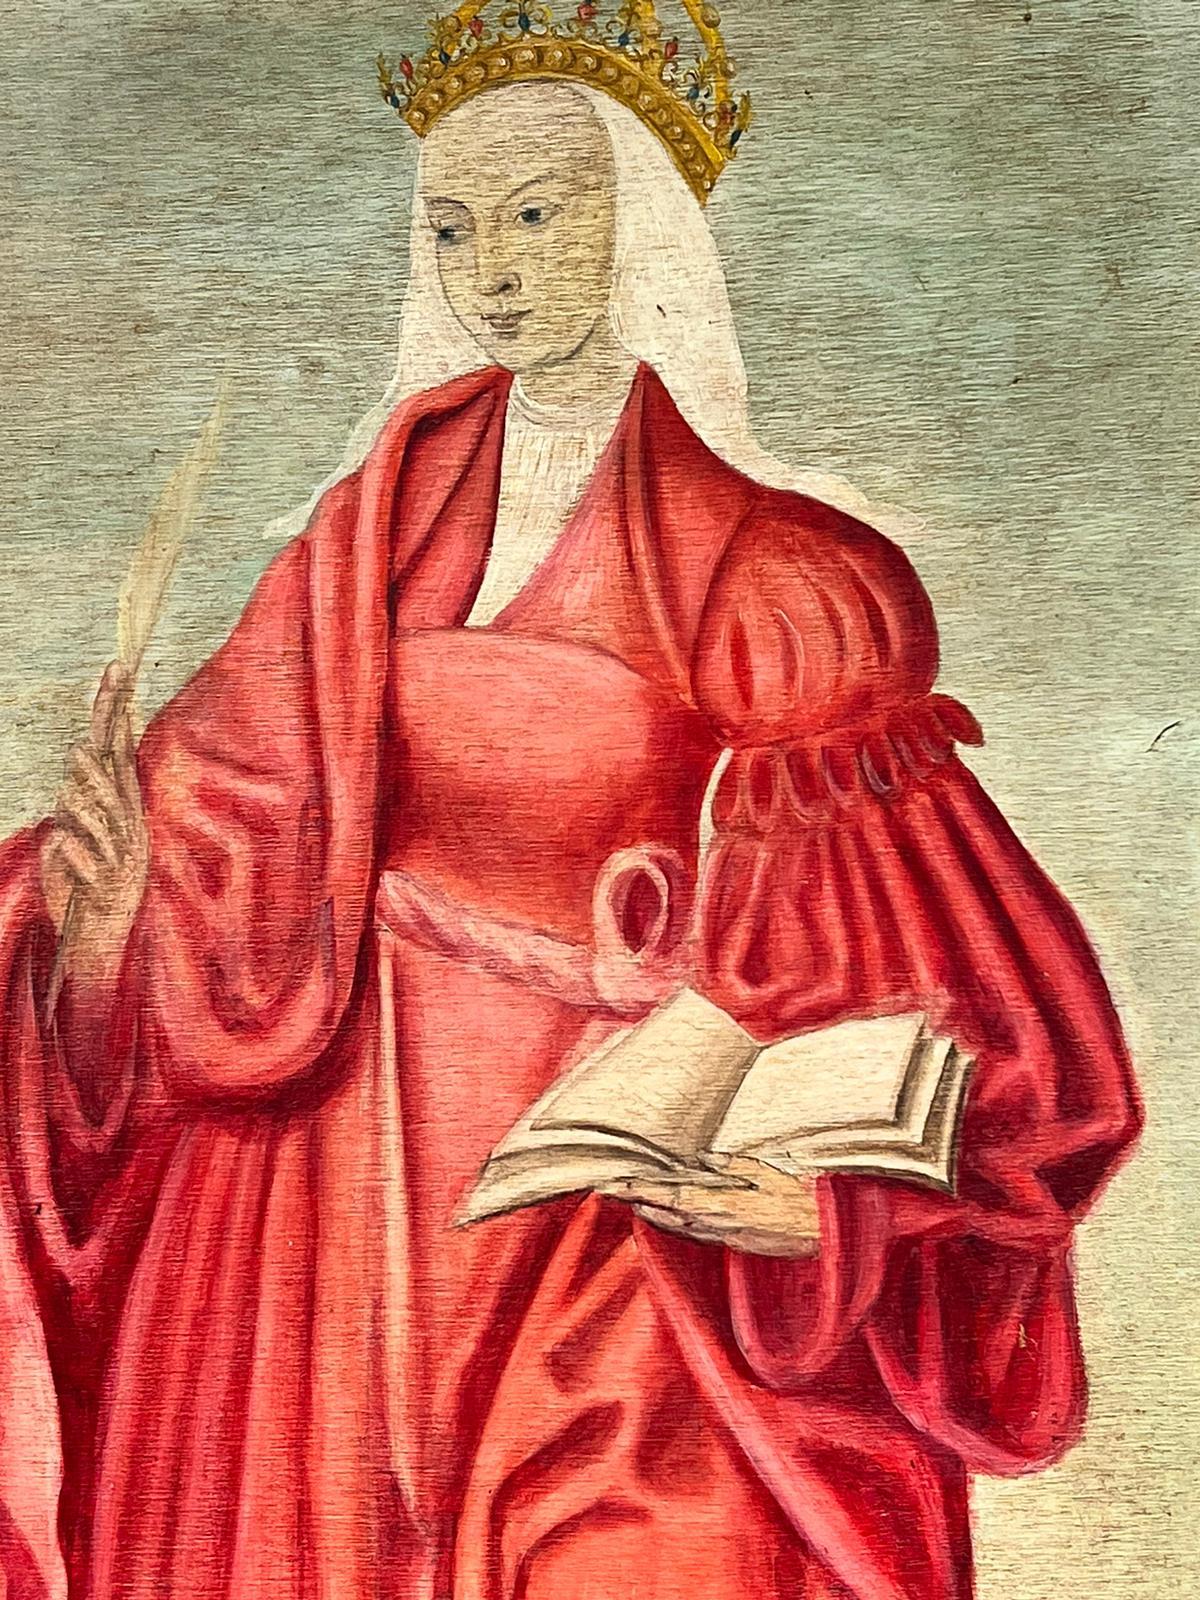 Portrait of Saint Catherine Medieval Renaissance Style Standing in Landscape oil - Painting by Renaissance style 